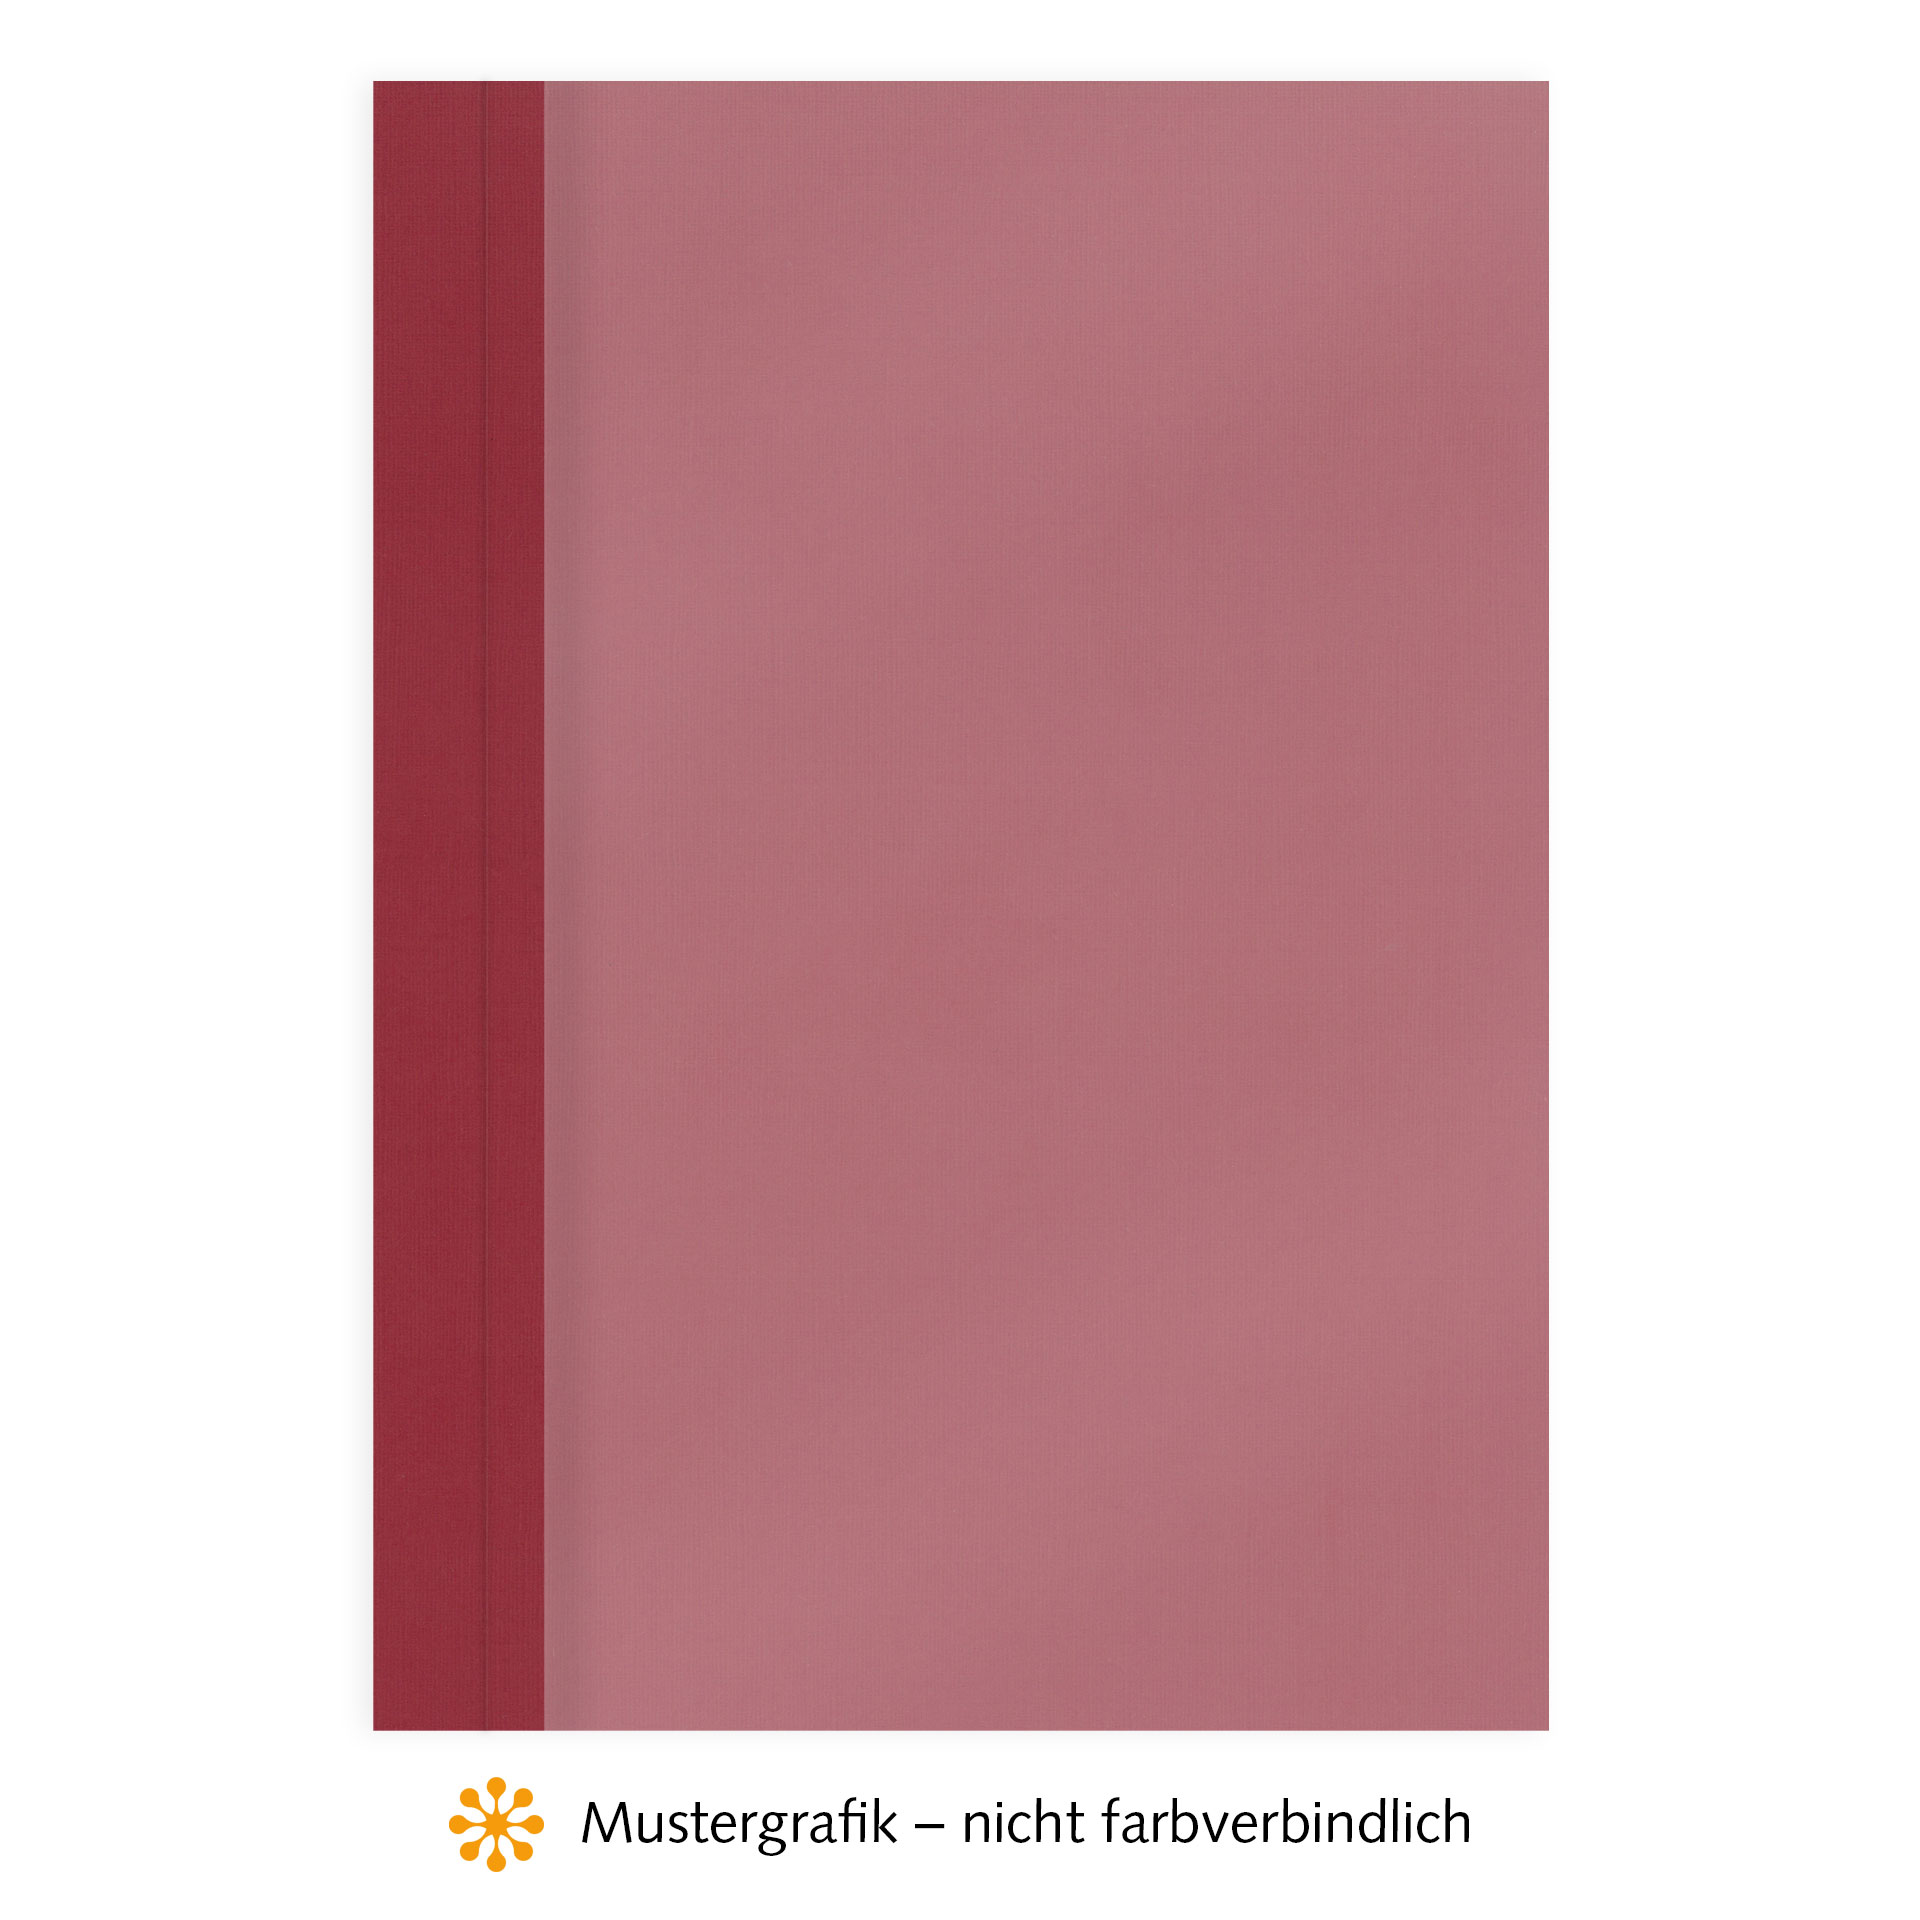 Ösenmappen DUO Cover, Vorderseite Folie MATT transparent, Rückseite Karton Leinen, Rot, 2 mm, 11 bis 20 Blatt